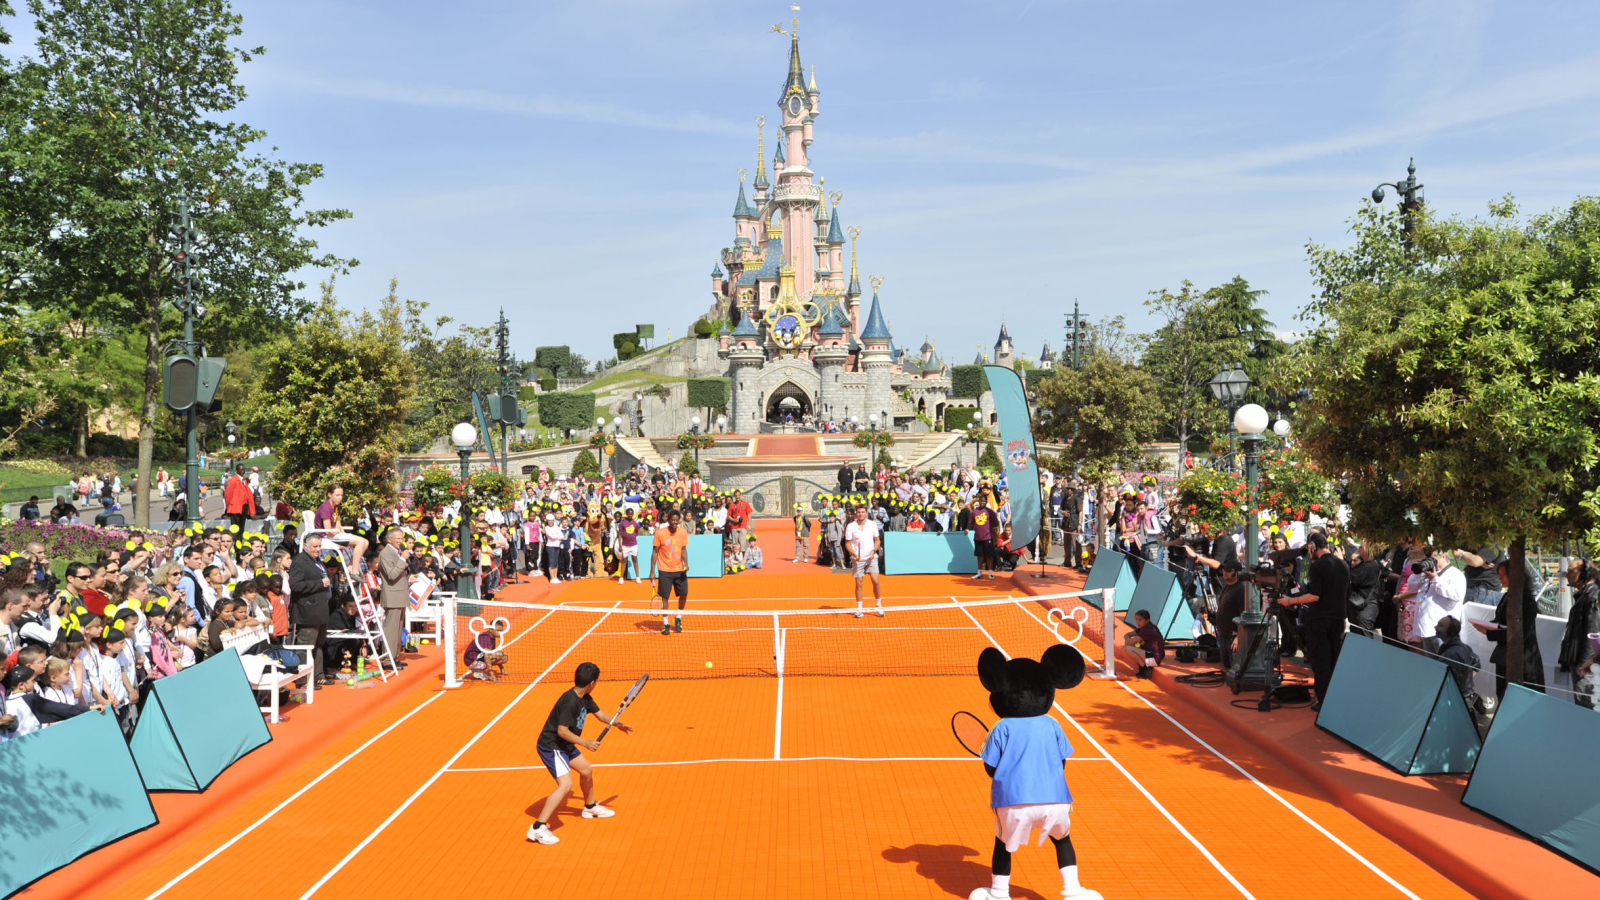 Tennis court at Disneyland, France